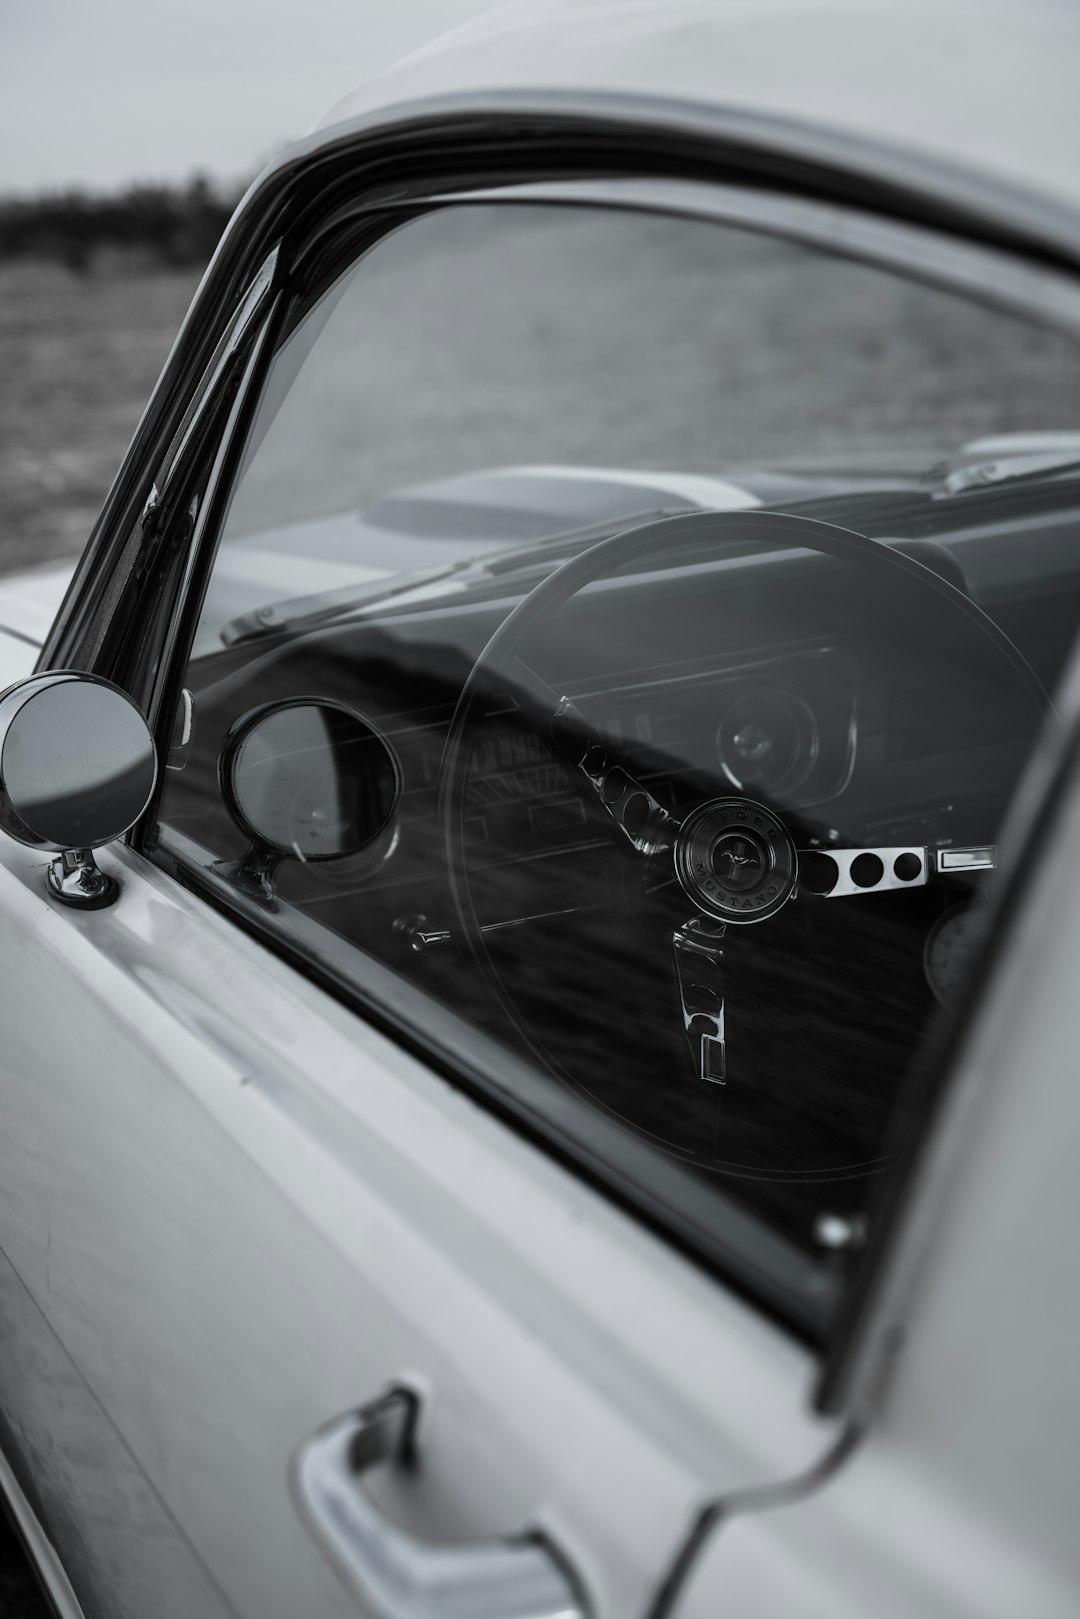 black mercedes benz car with white car door